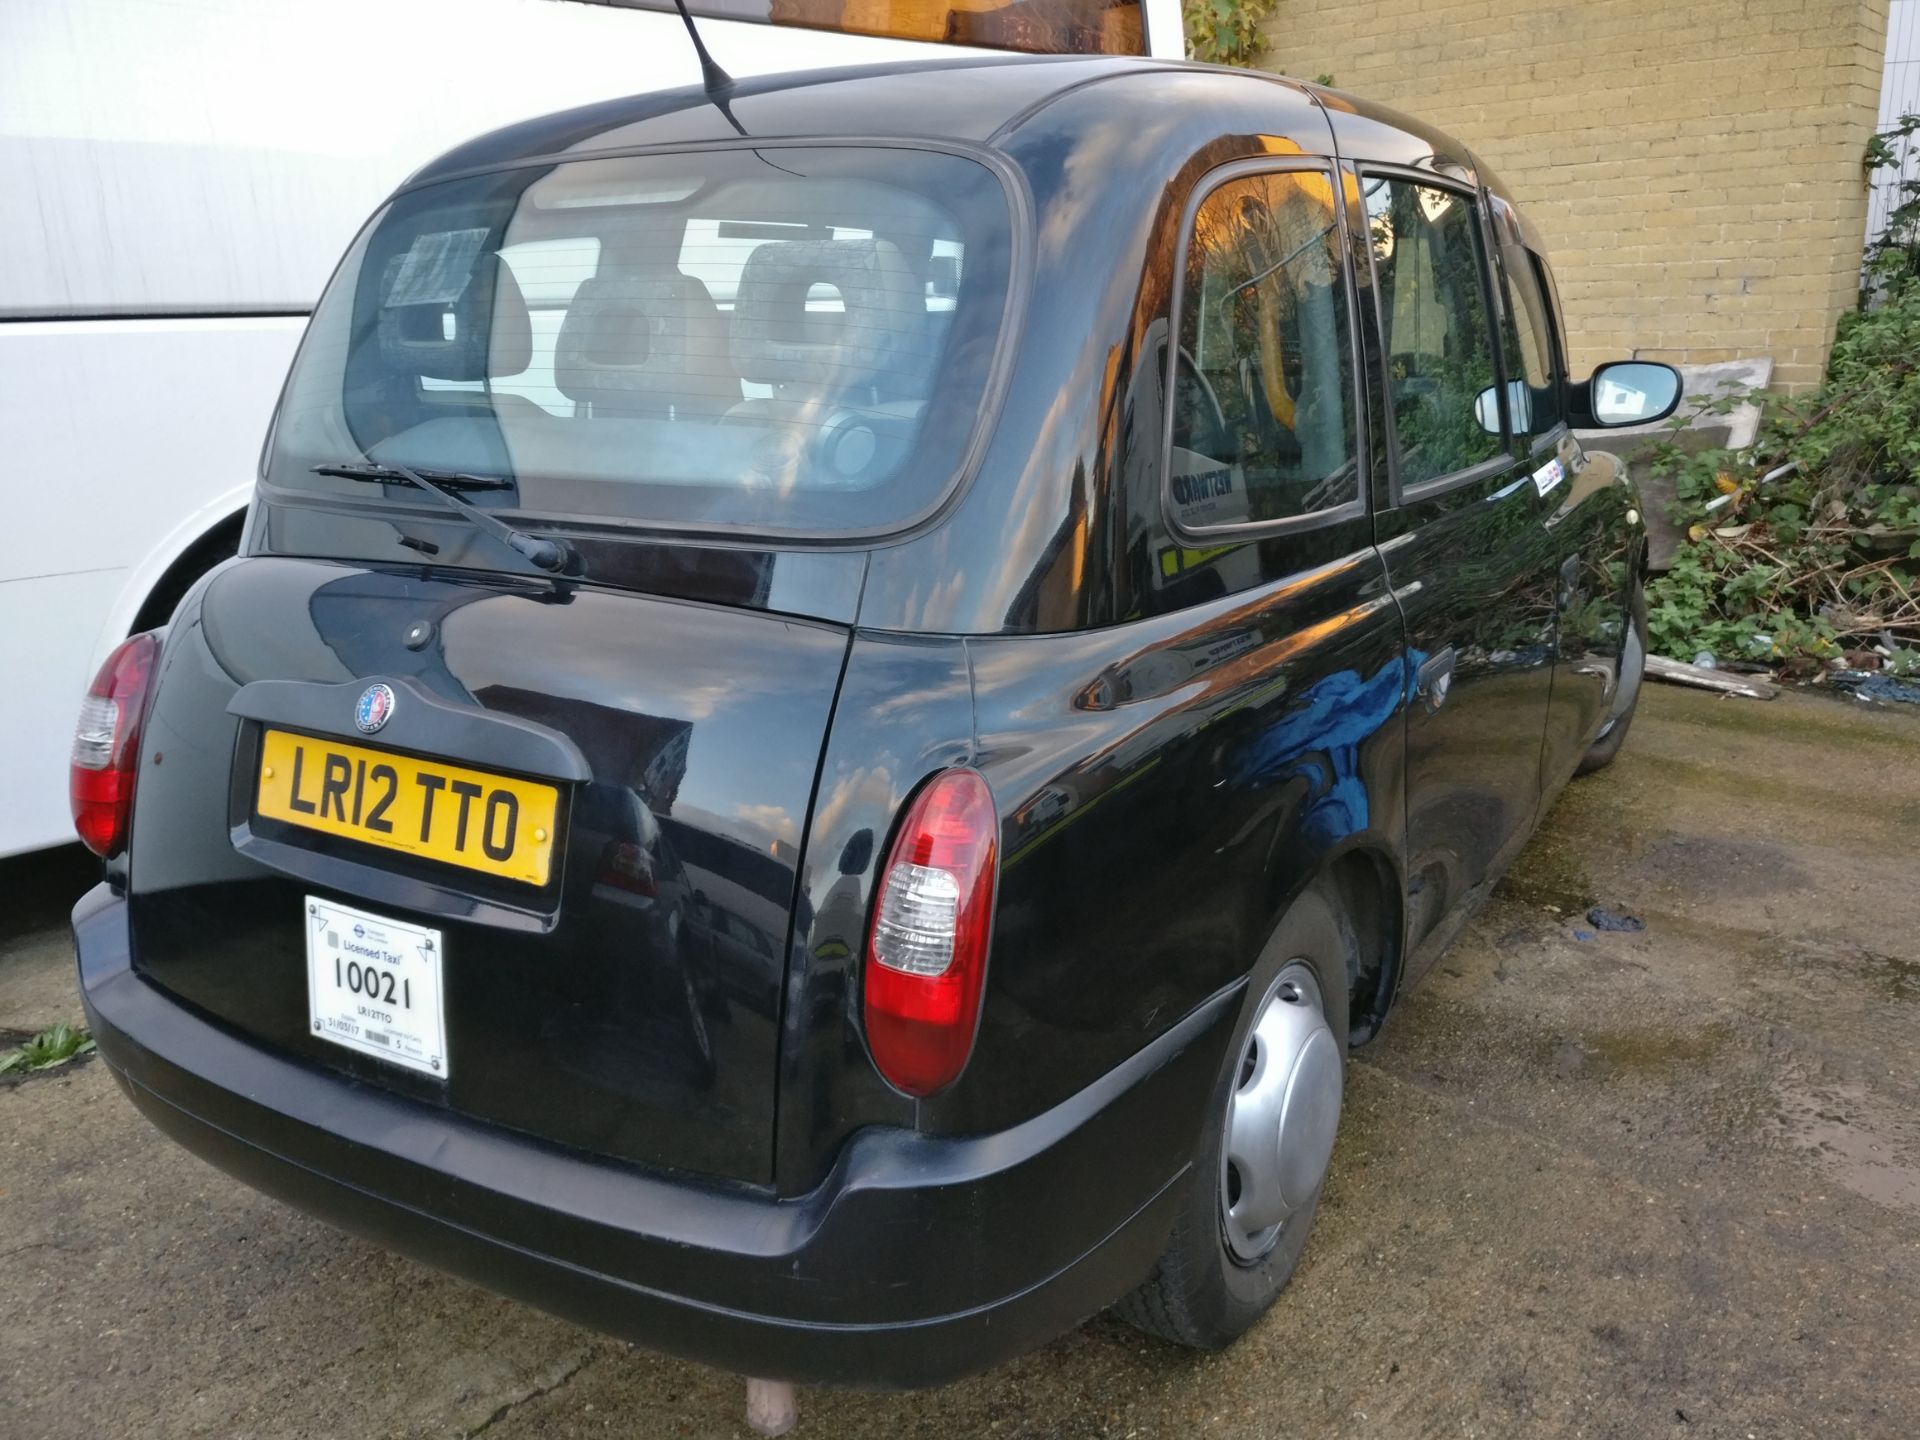 * 2012 London Taxis International FX4 Auto ''Black Cab'', Reg LR12 TTO, ?miles, MOT expired 30 March - Image 3 of 6